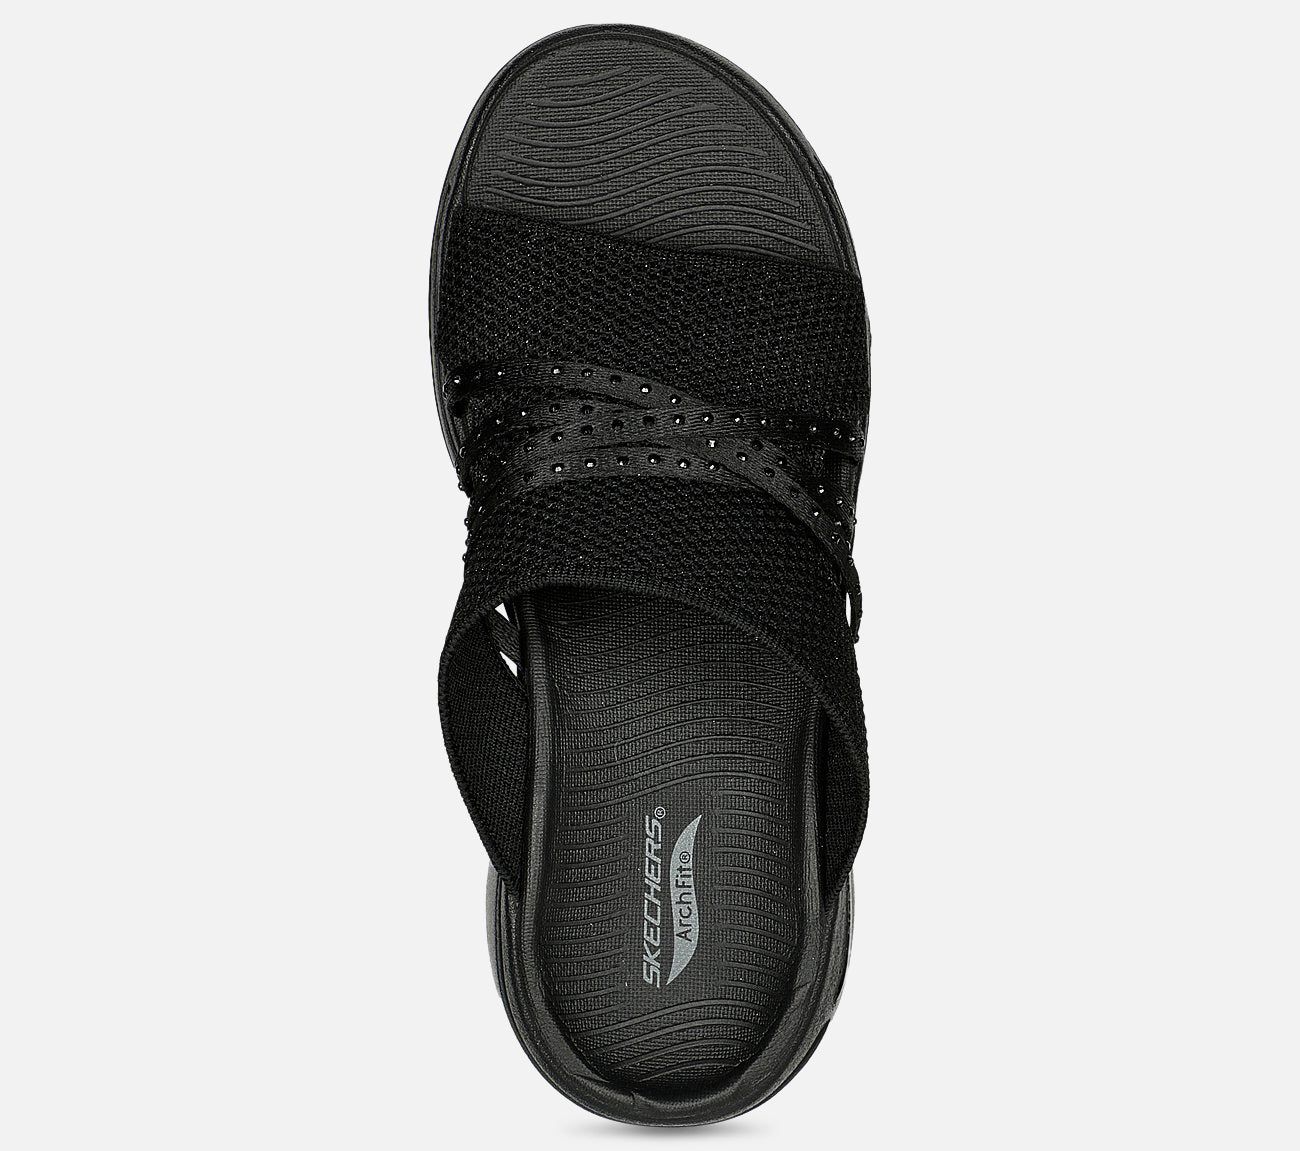 GO WALK Arch Fit Sandal - Glisten Sandal Skechers